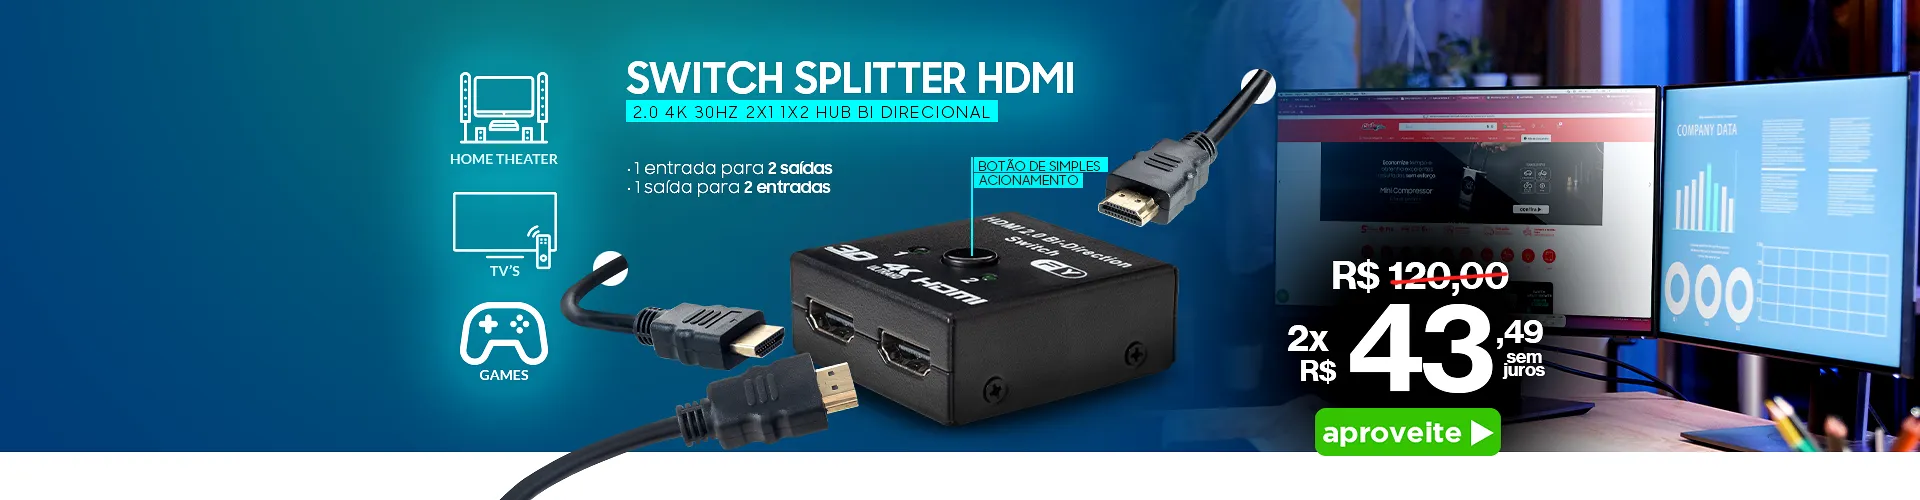 Switch Splitter Hdmi 2.0 4K 30Hz 2x1 1x2 Hub Bi-Direcional